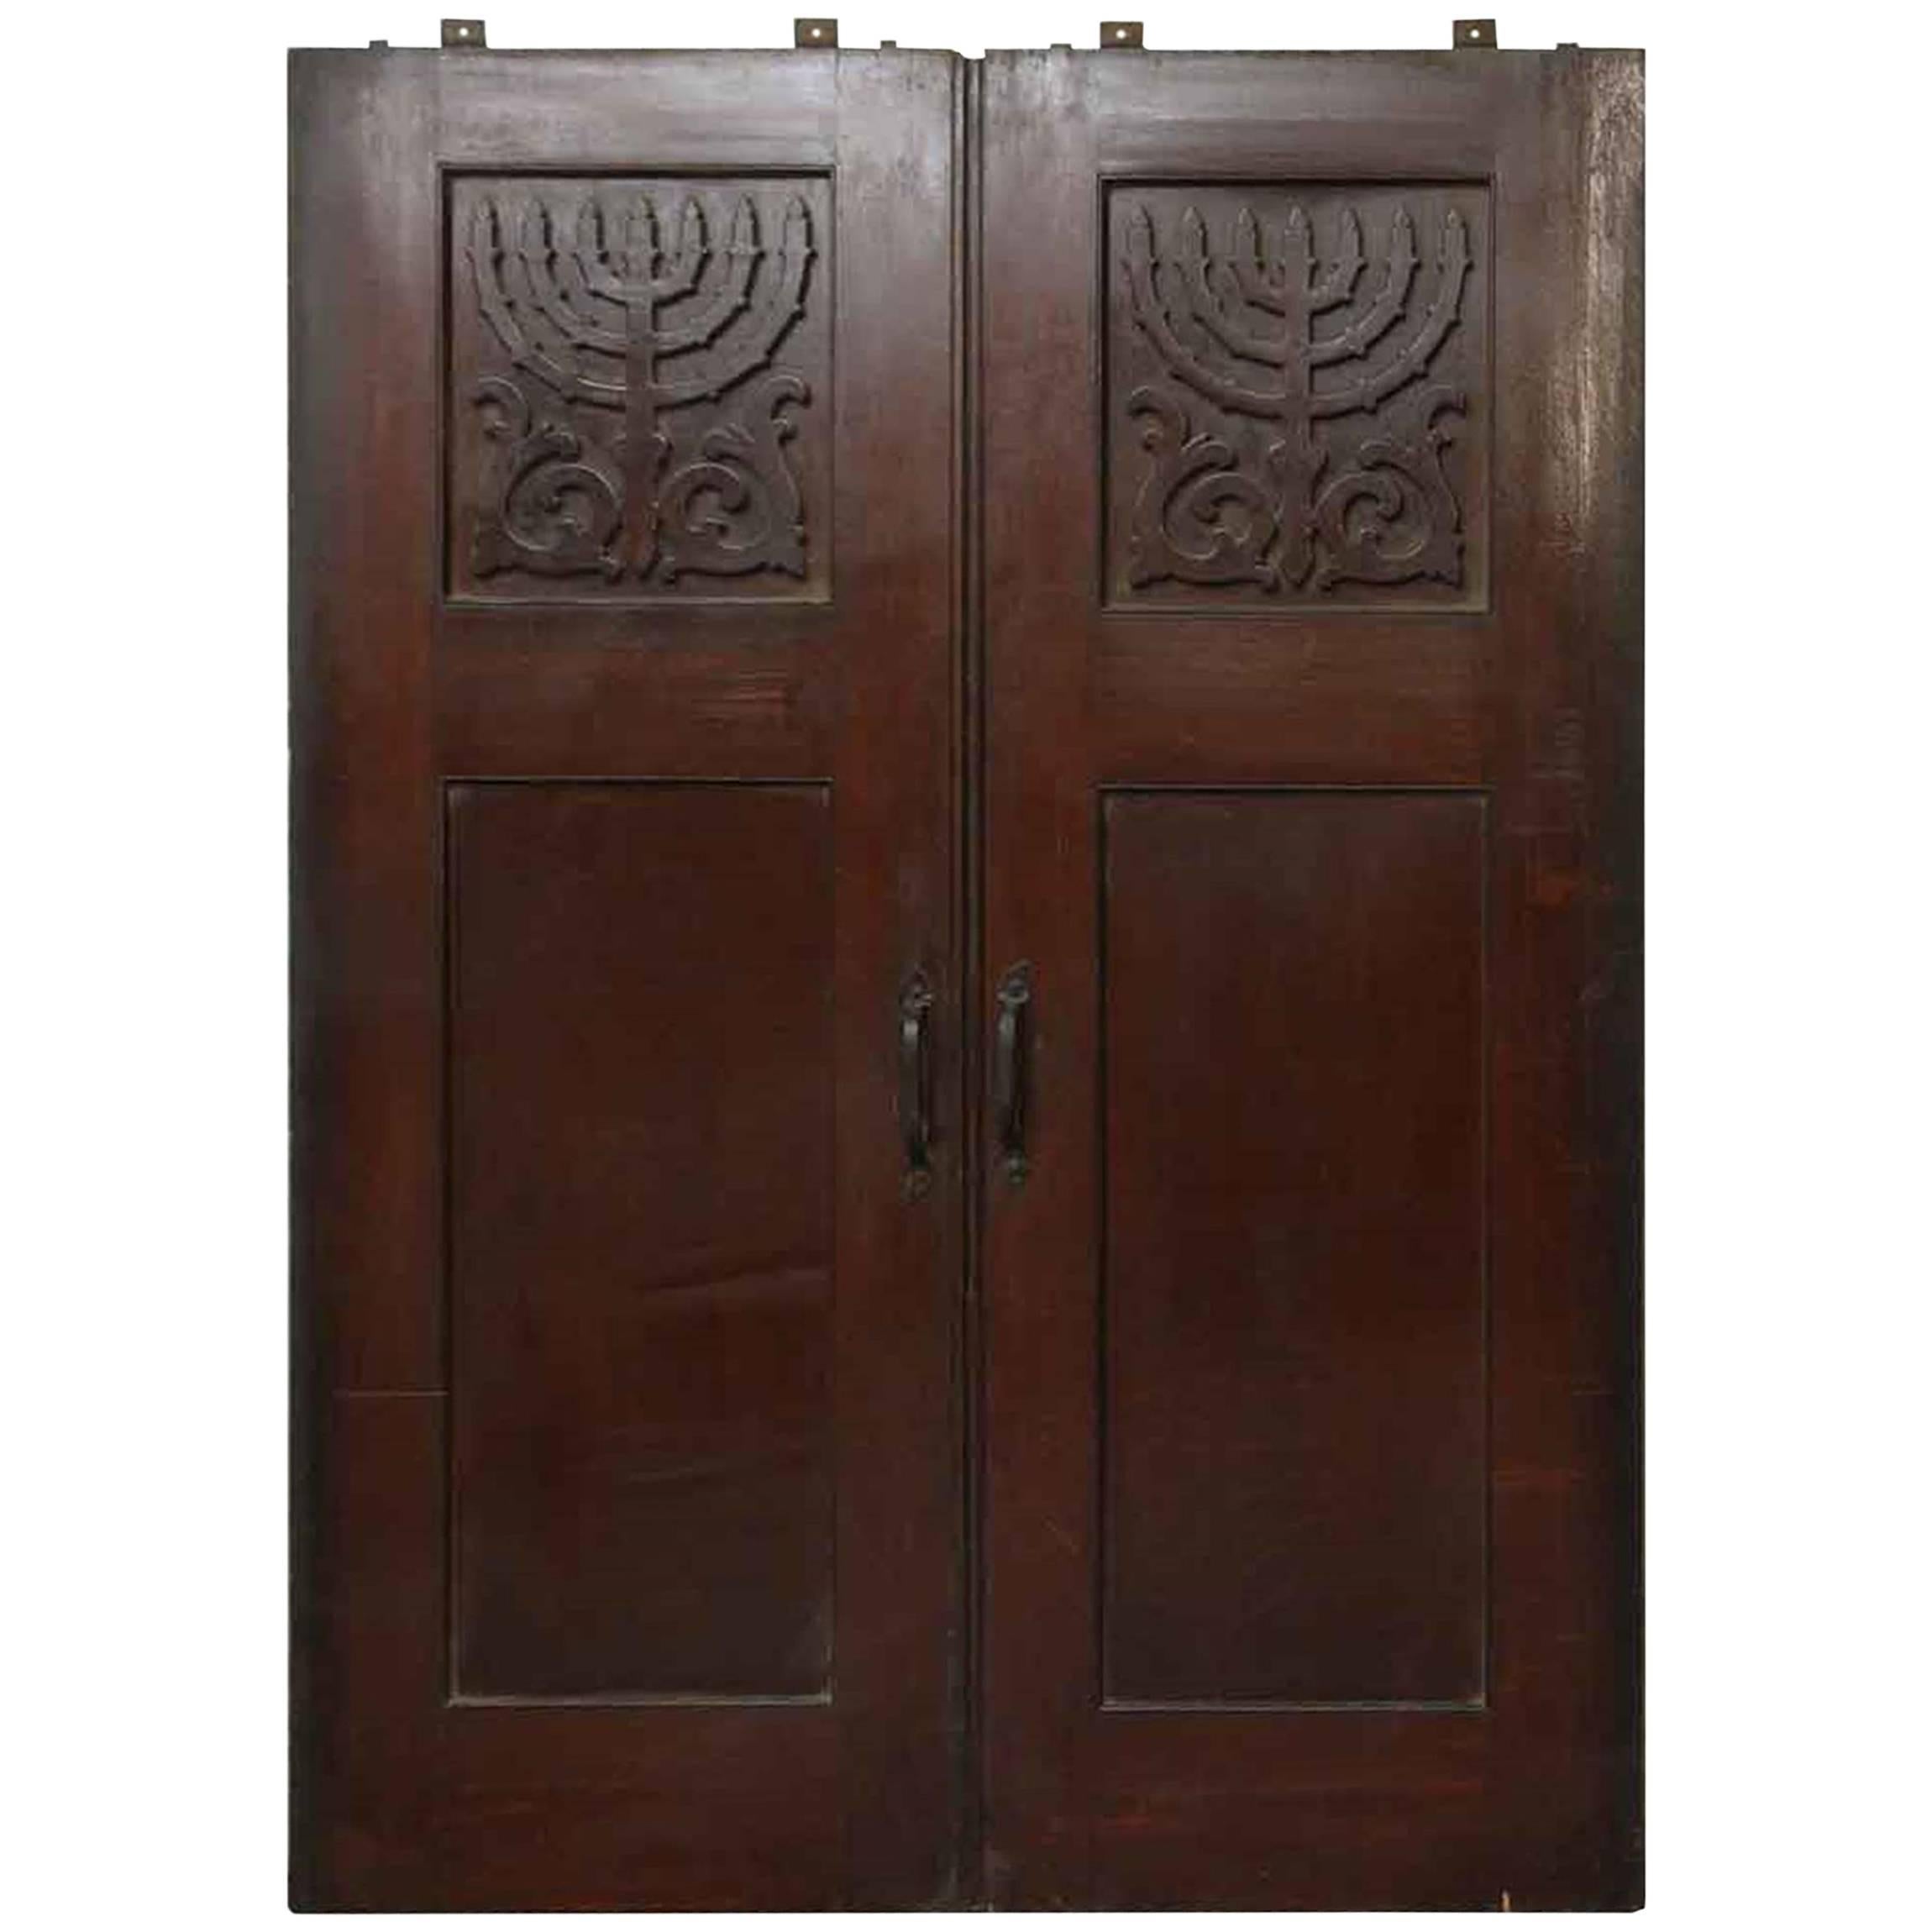 1920s Double Quarter Sawn Oak Doors from a Jewish Synagogue and Original Hardwar